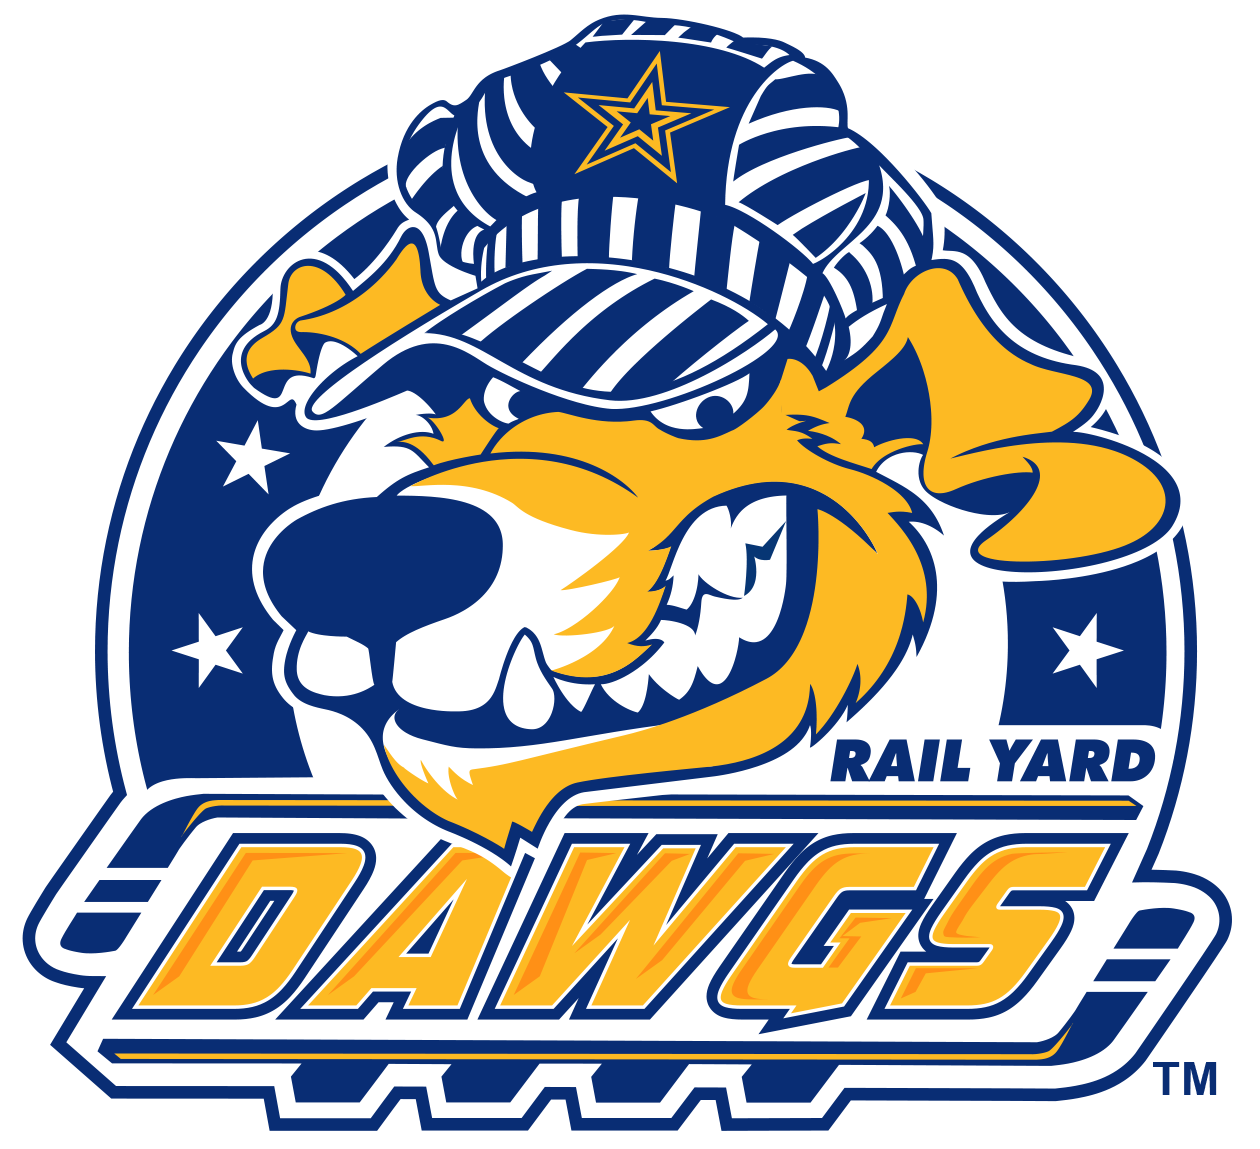 Roanoke Rail Yard Dawgs unveil new logo, jersey design